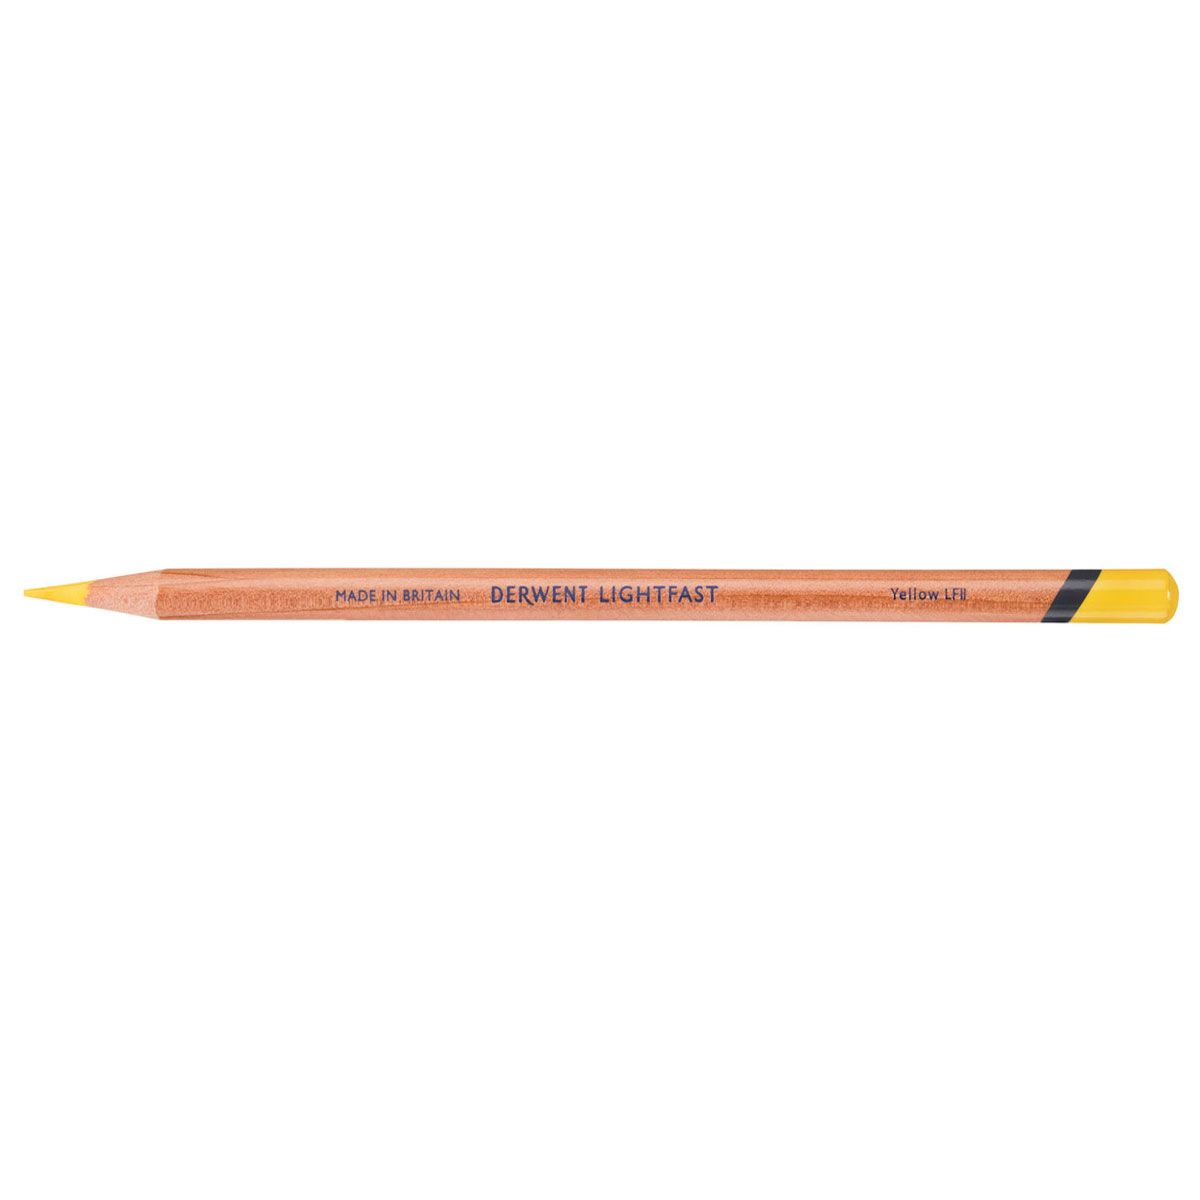 Derwent Lightfast Pencil Colour: Yellow